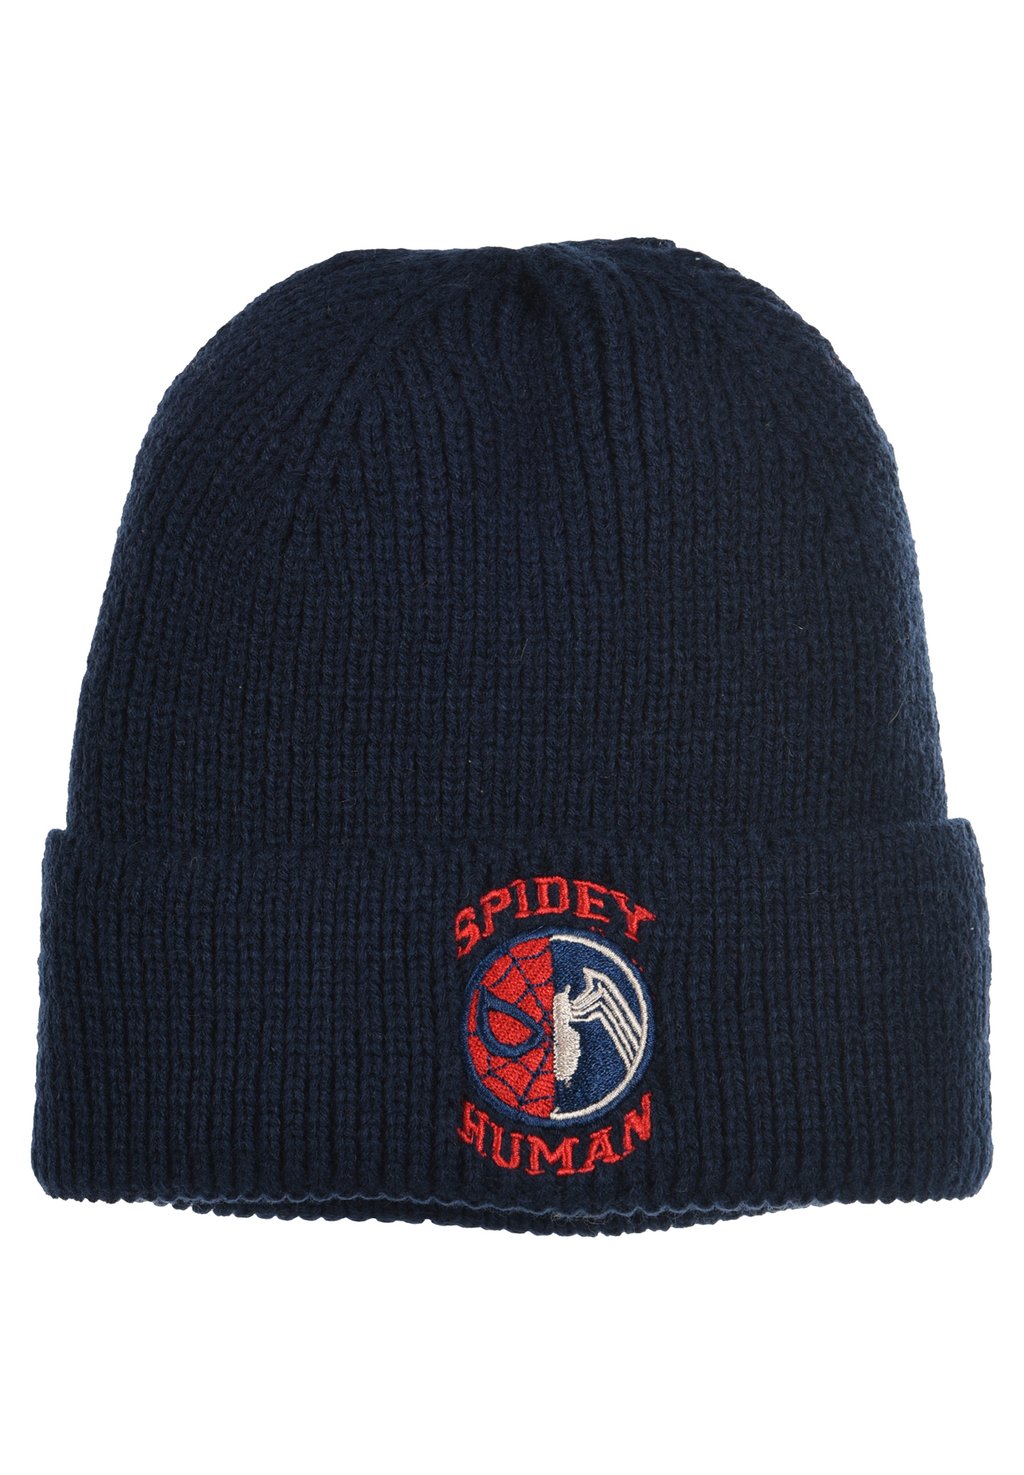 Шапка WINTER Spiderman, цвет dunkel blau шапка winter set disney цвет dunkel blau